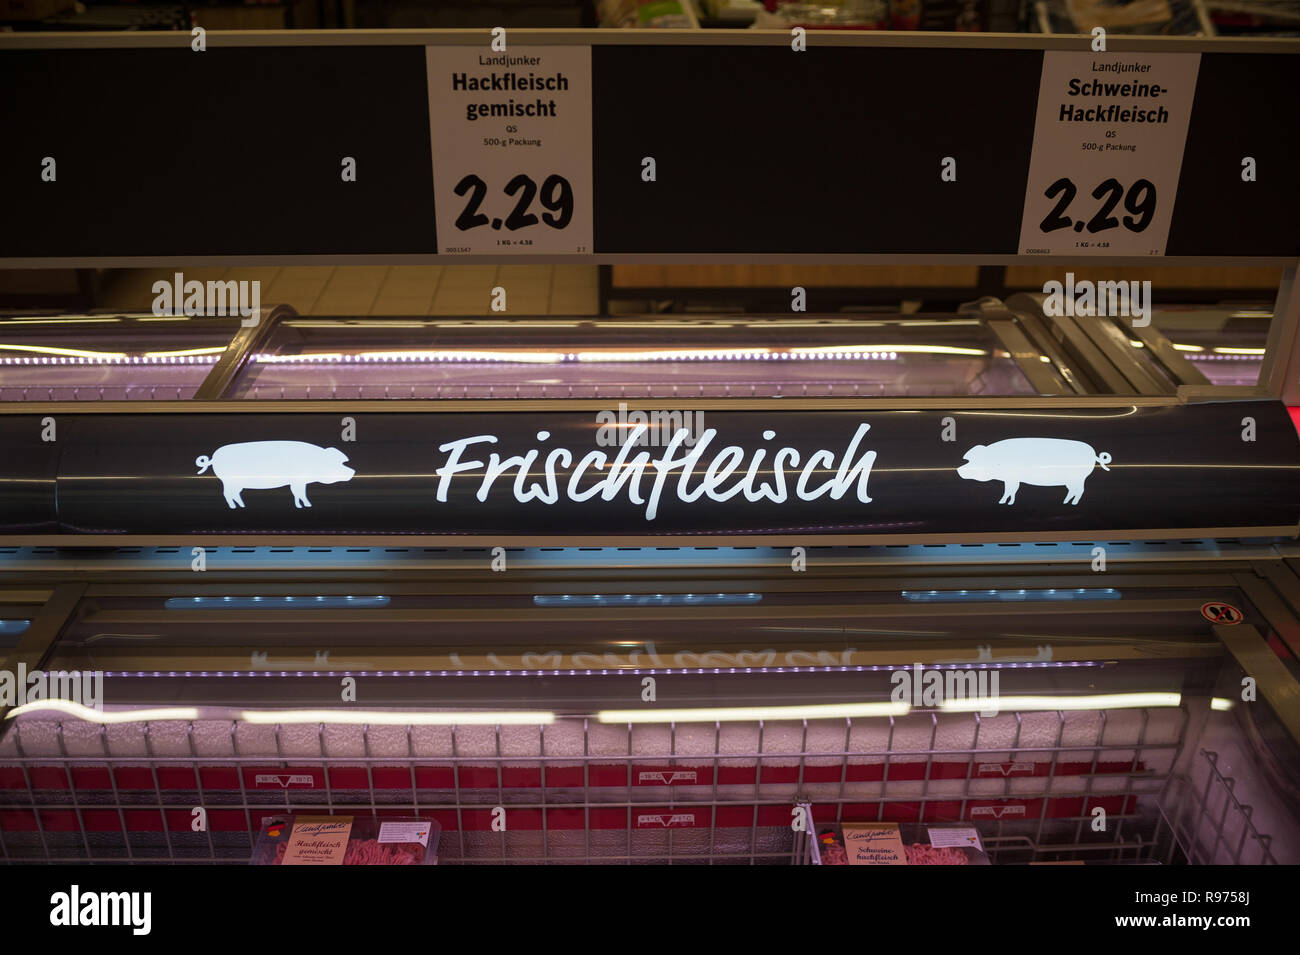 09.06.2017, Cologne, Northrhine-Westphalia, Germany, Europe - Packaged pork inside a freezer cabinet at a supermarket in Cologne. Stock Photo